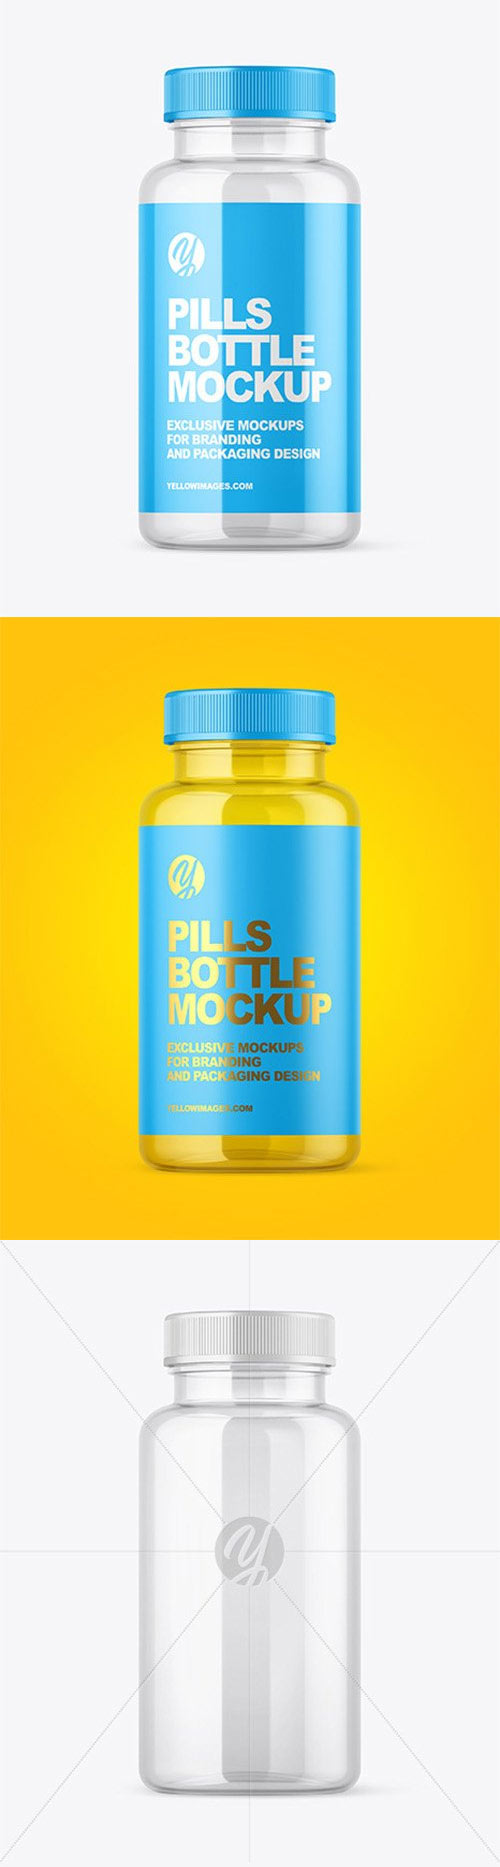 Empty Pills Bottle Mockup 54851